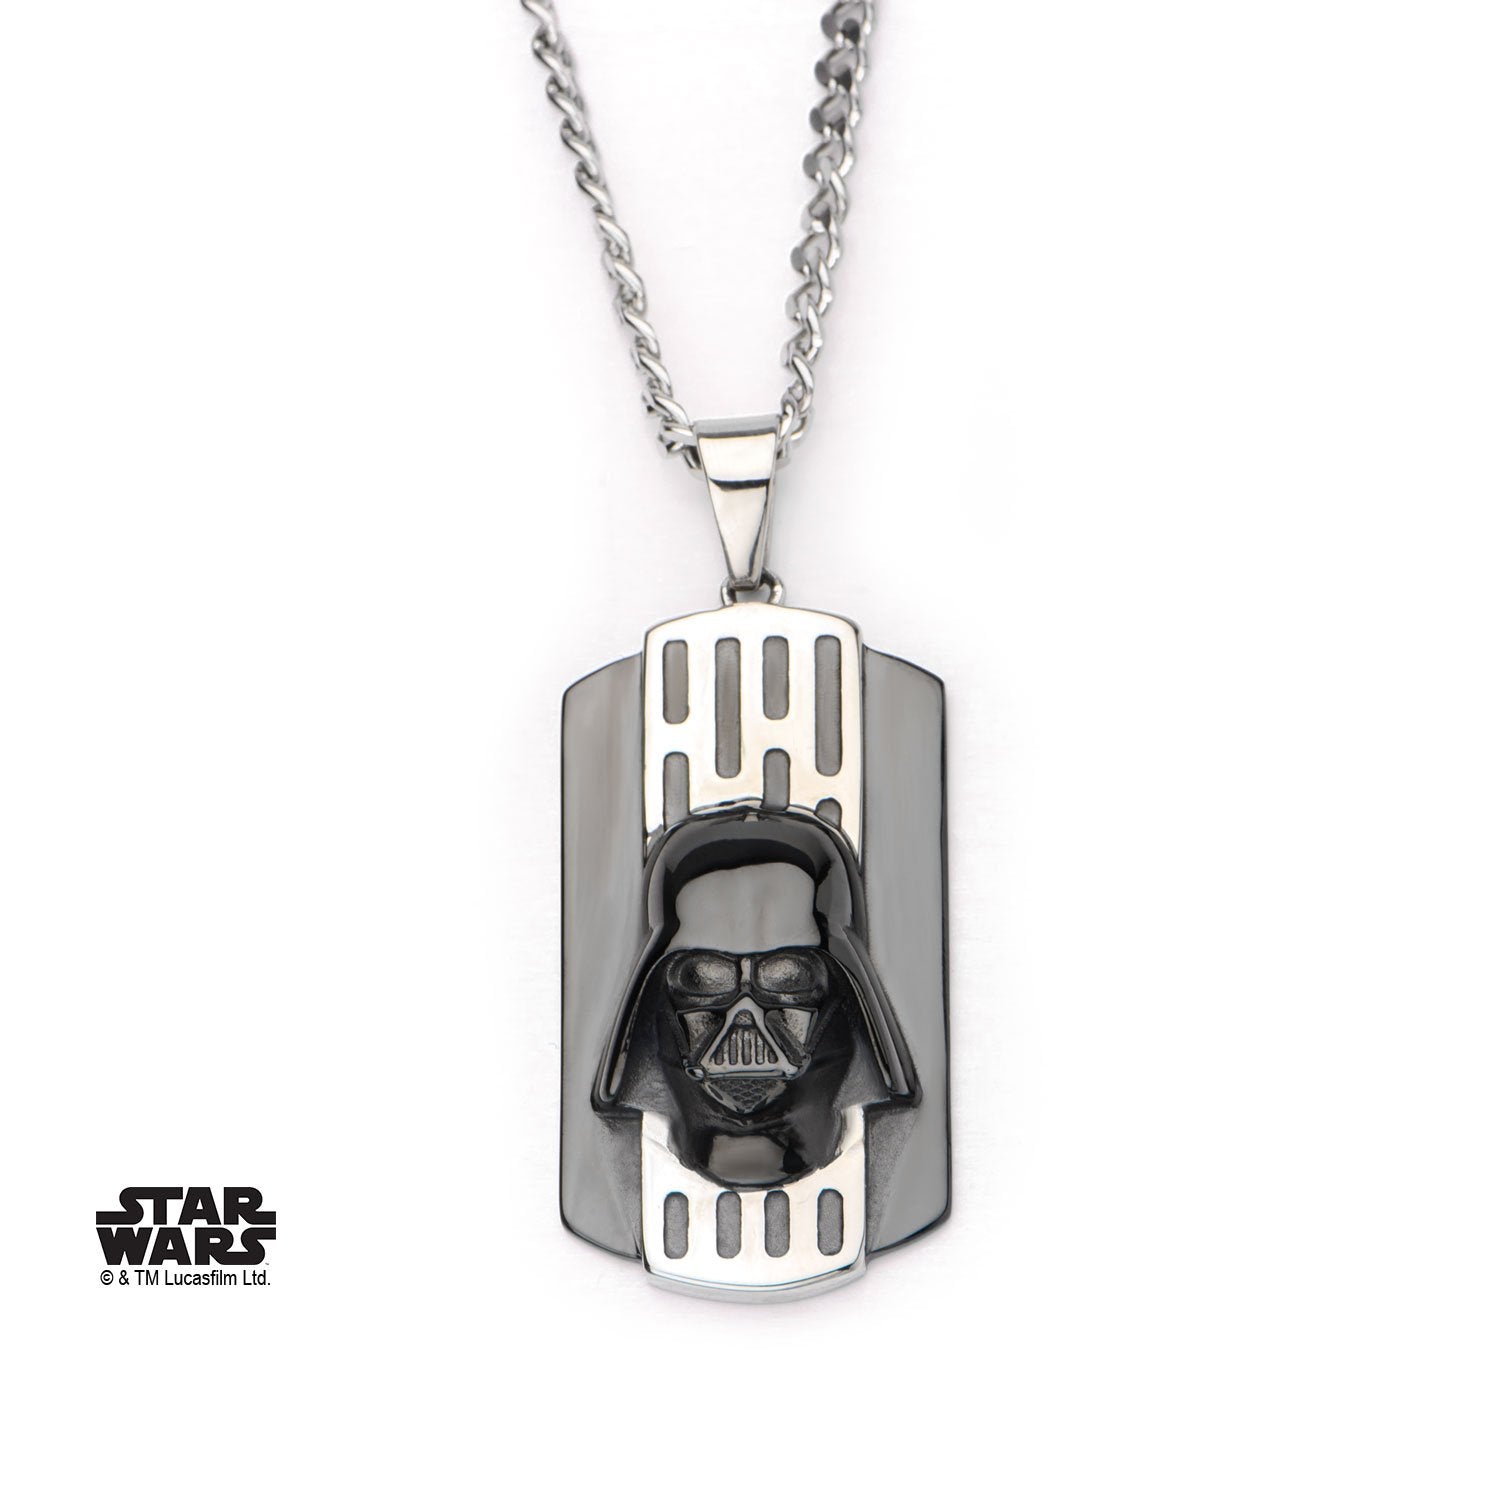 Star Wars 3D Darth Vader Dog Tag Pendant Necklace